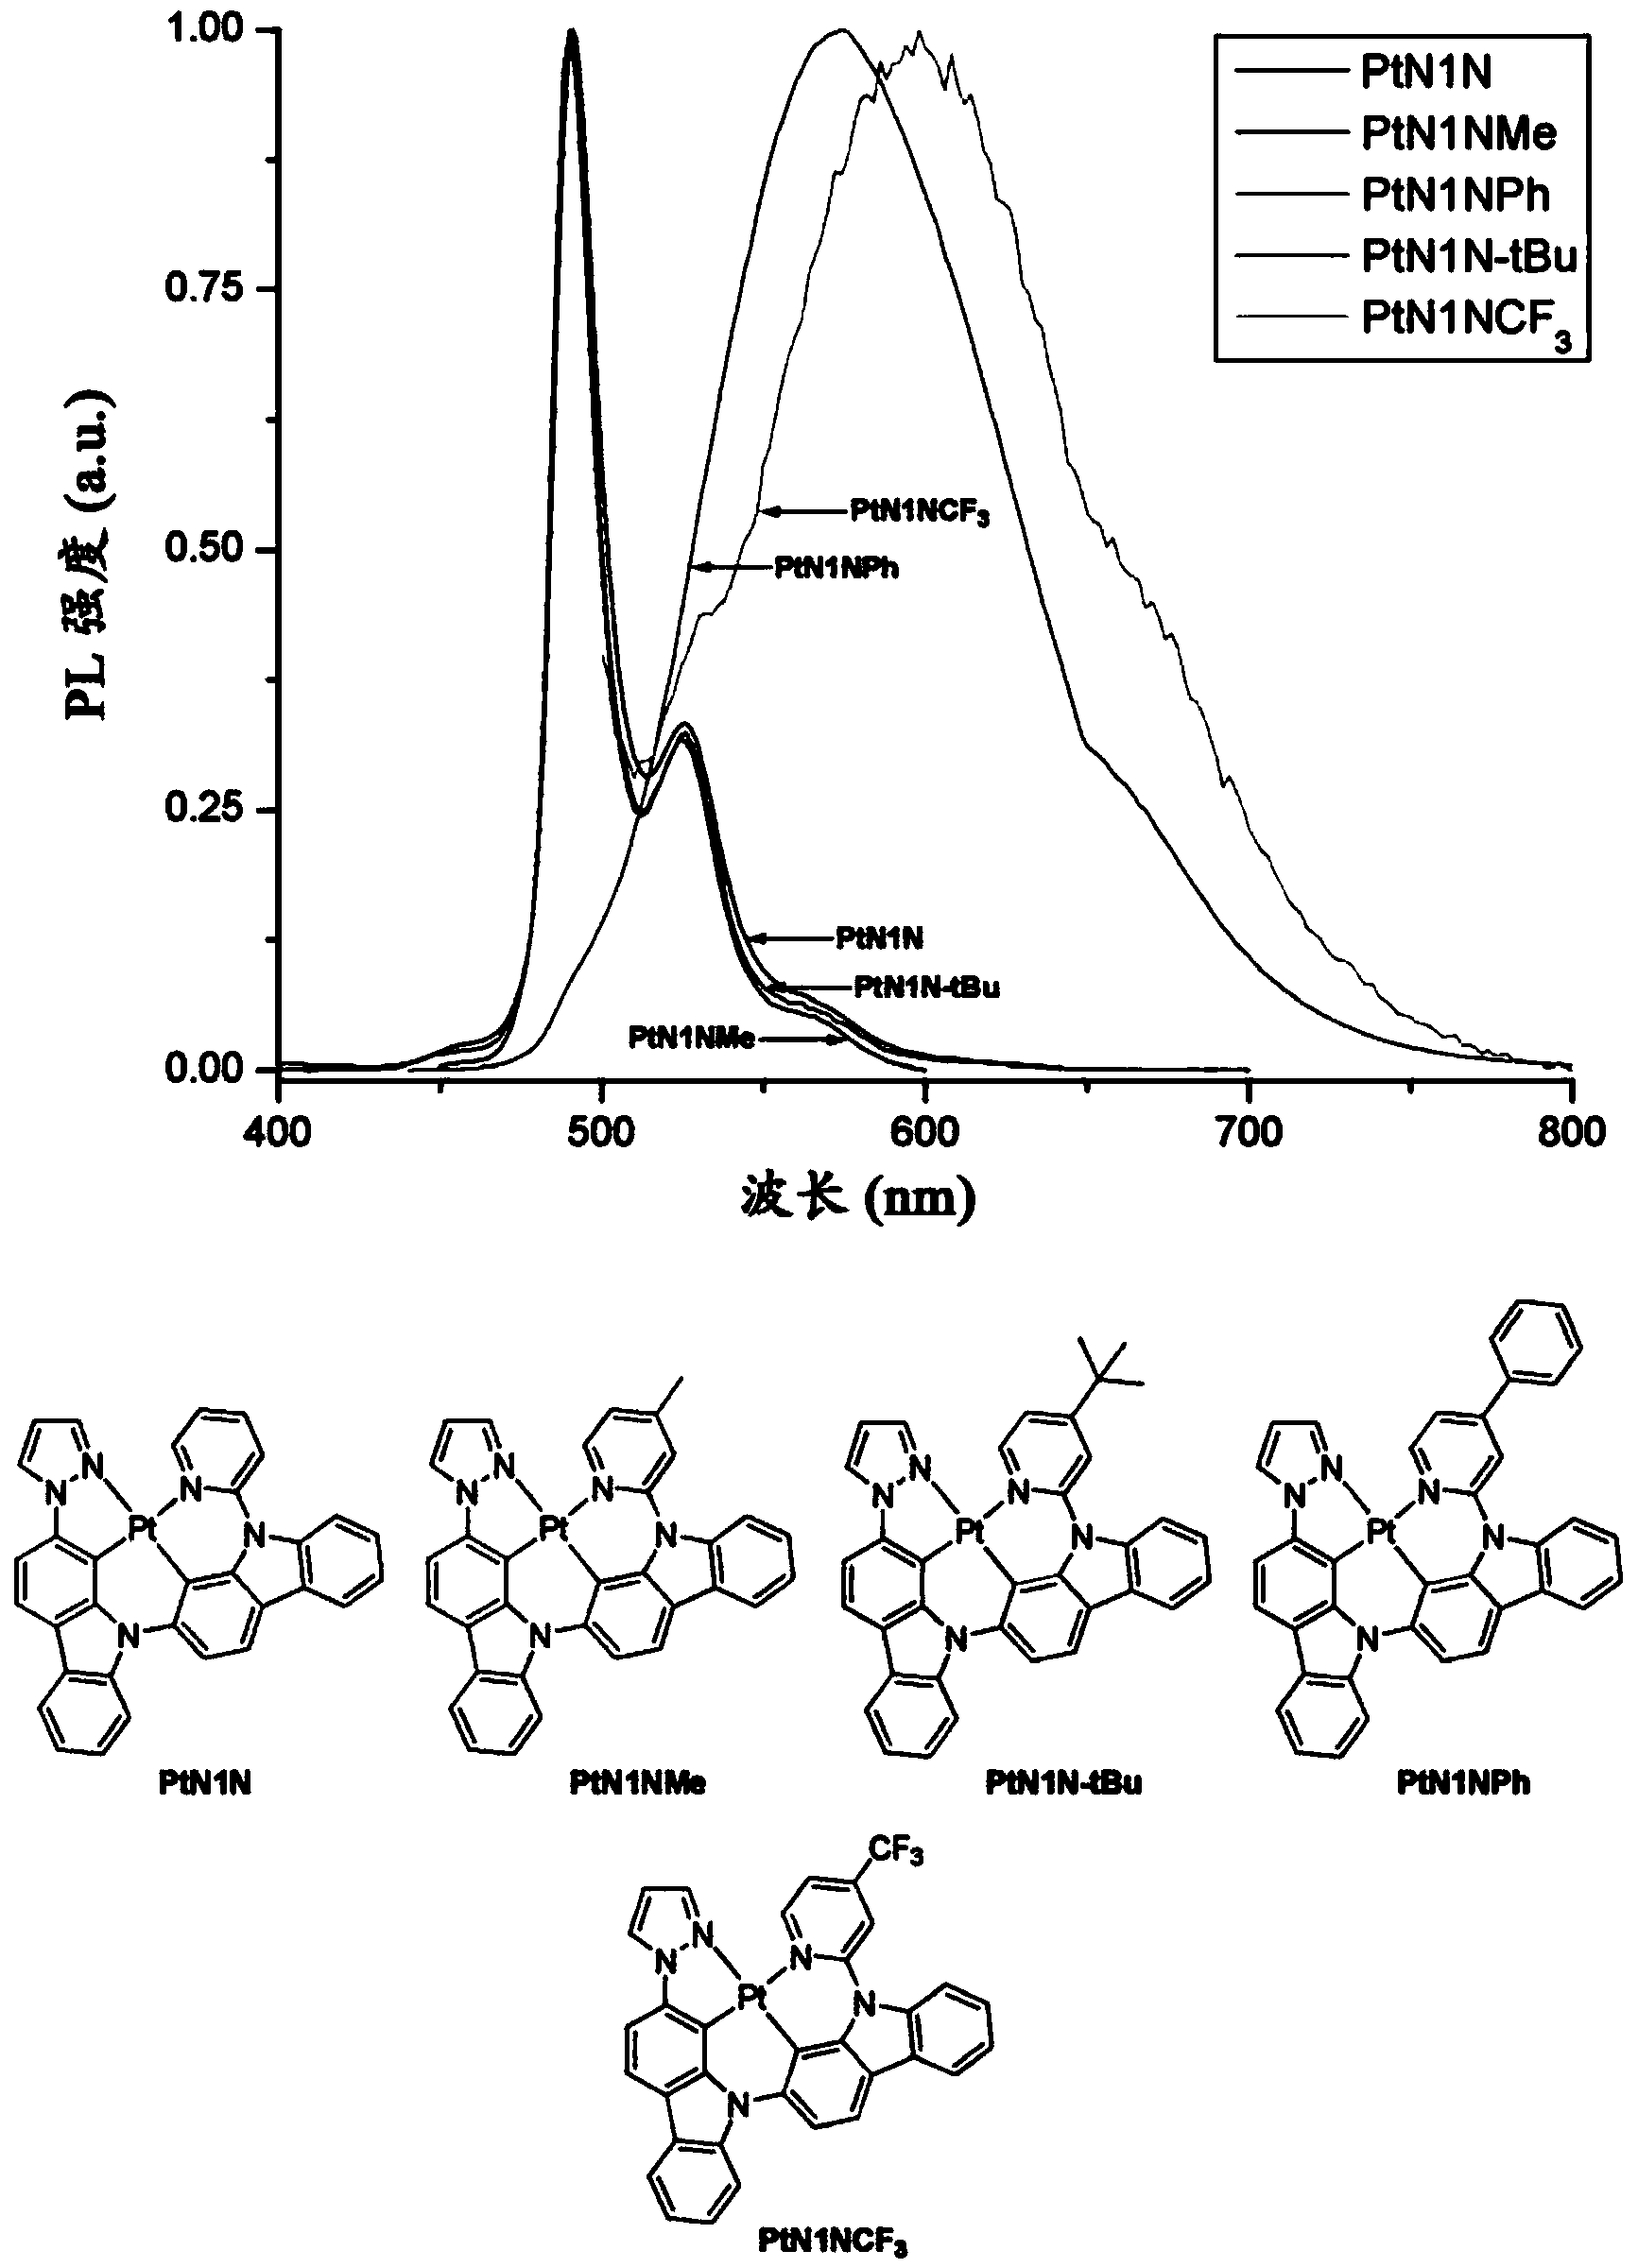 Phosphorescent tetradentate metal complexes having modified emission spectra